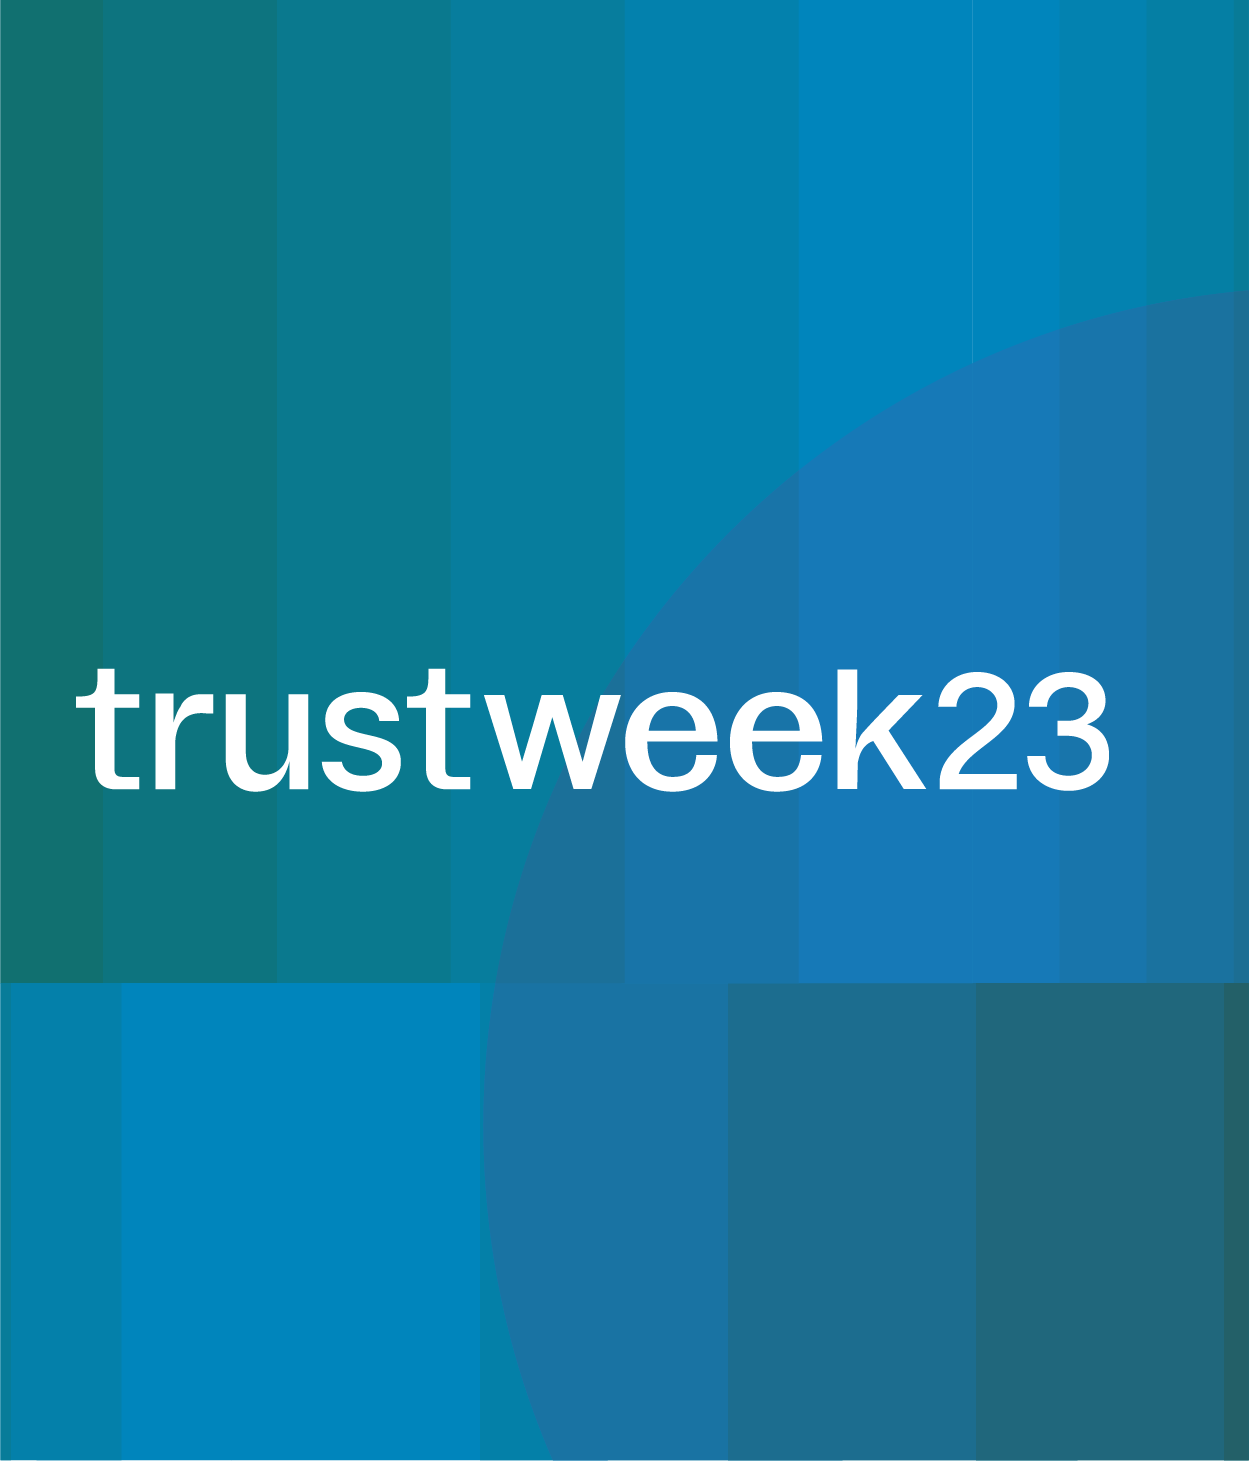 Graphic that reads "trustweek23."